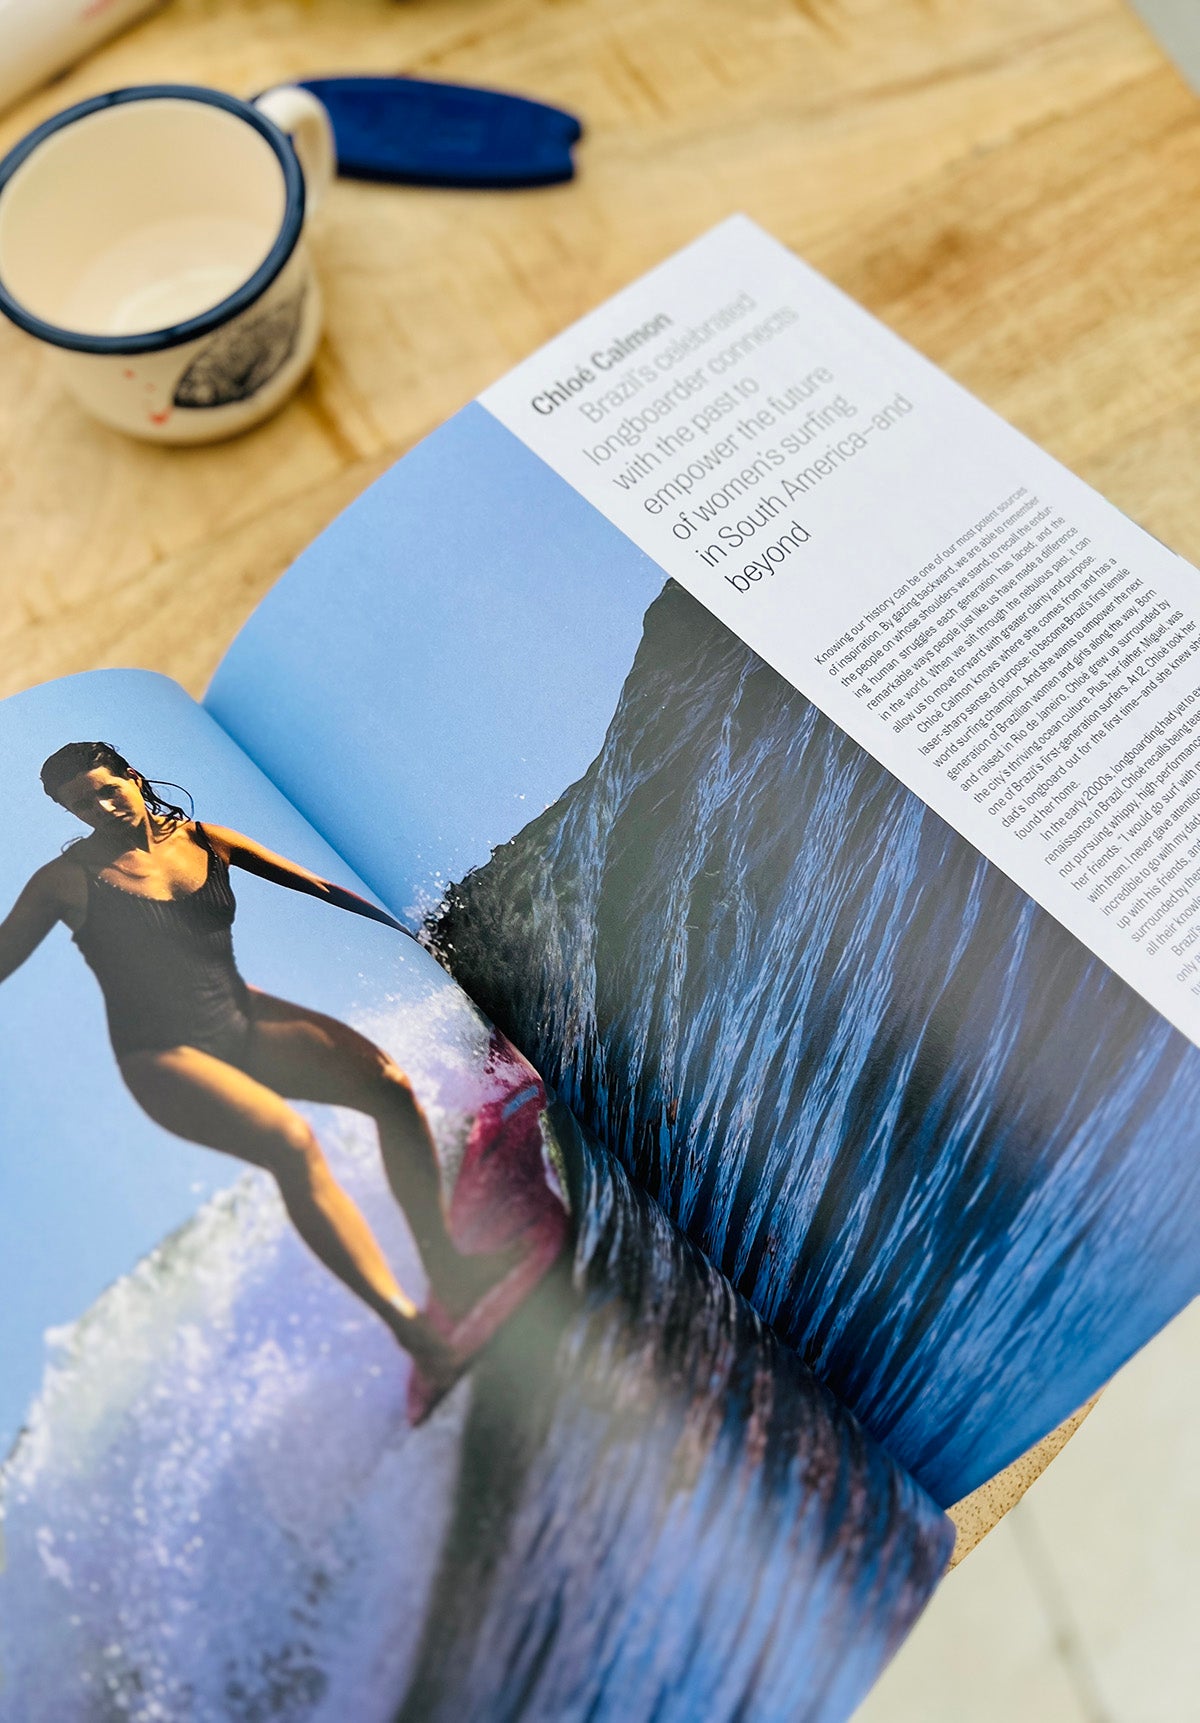 Book "She Surf"